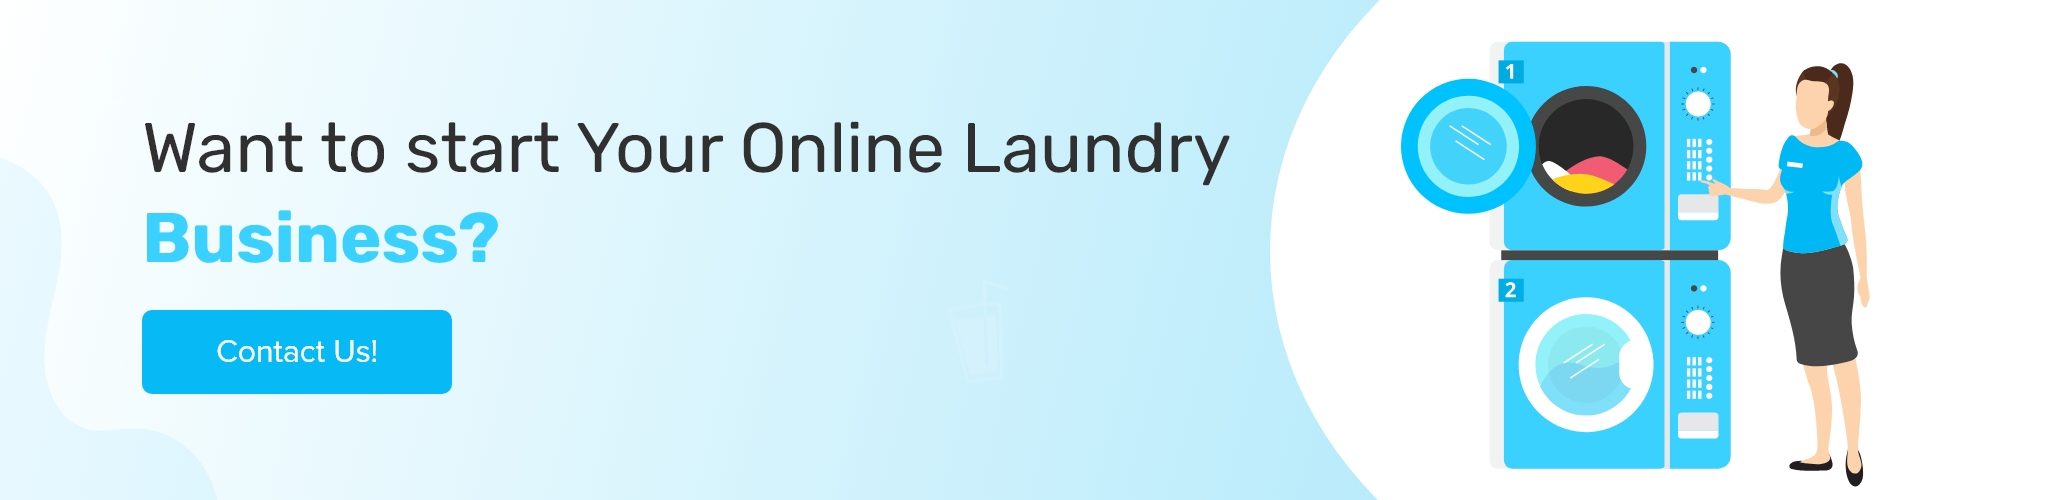 Laundry Business CTA